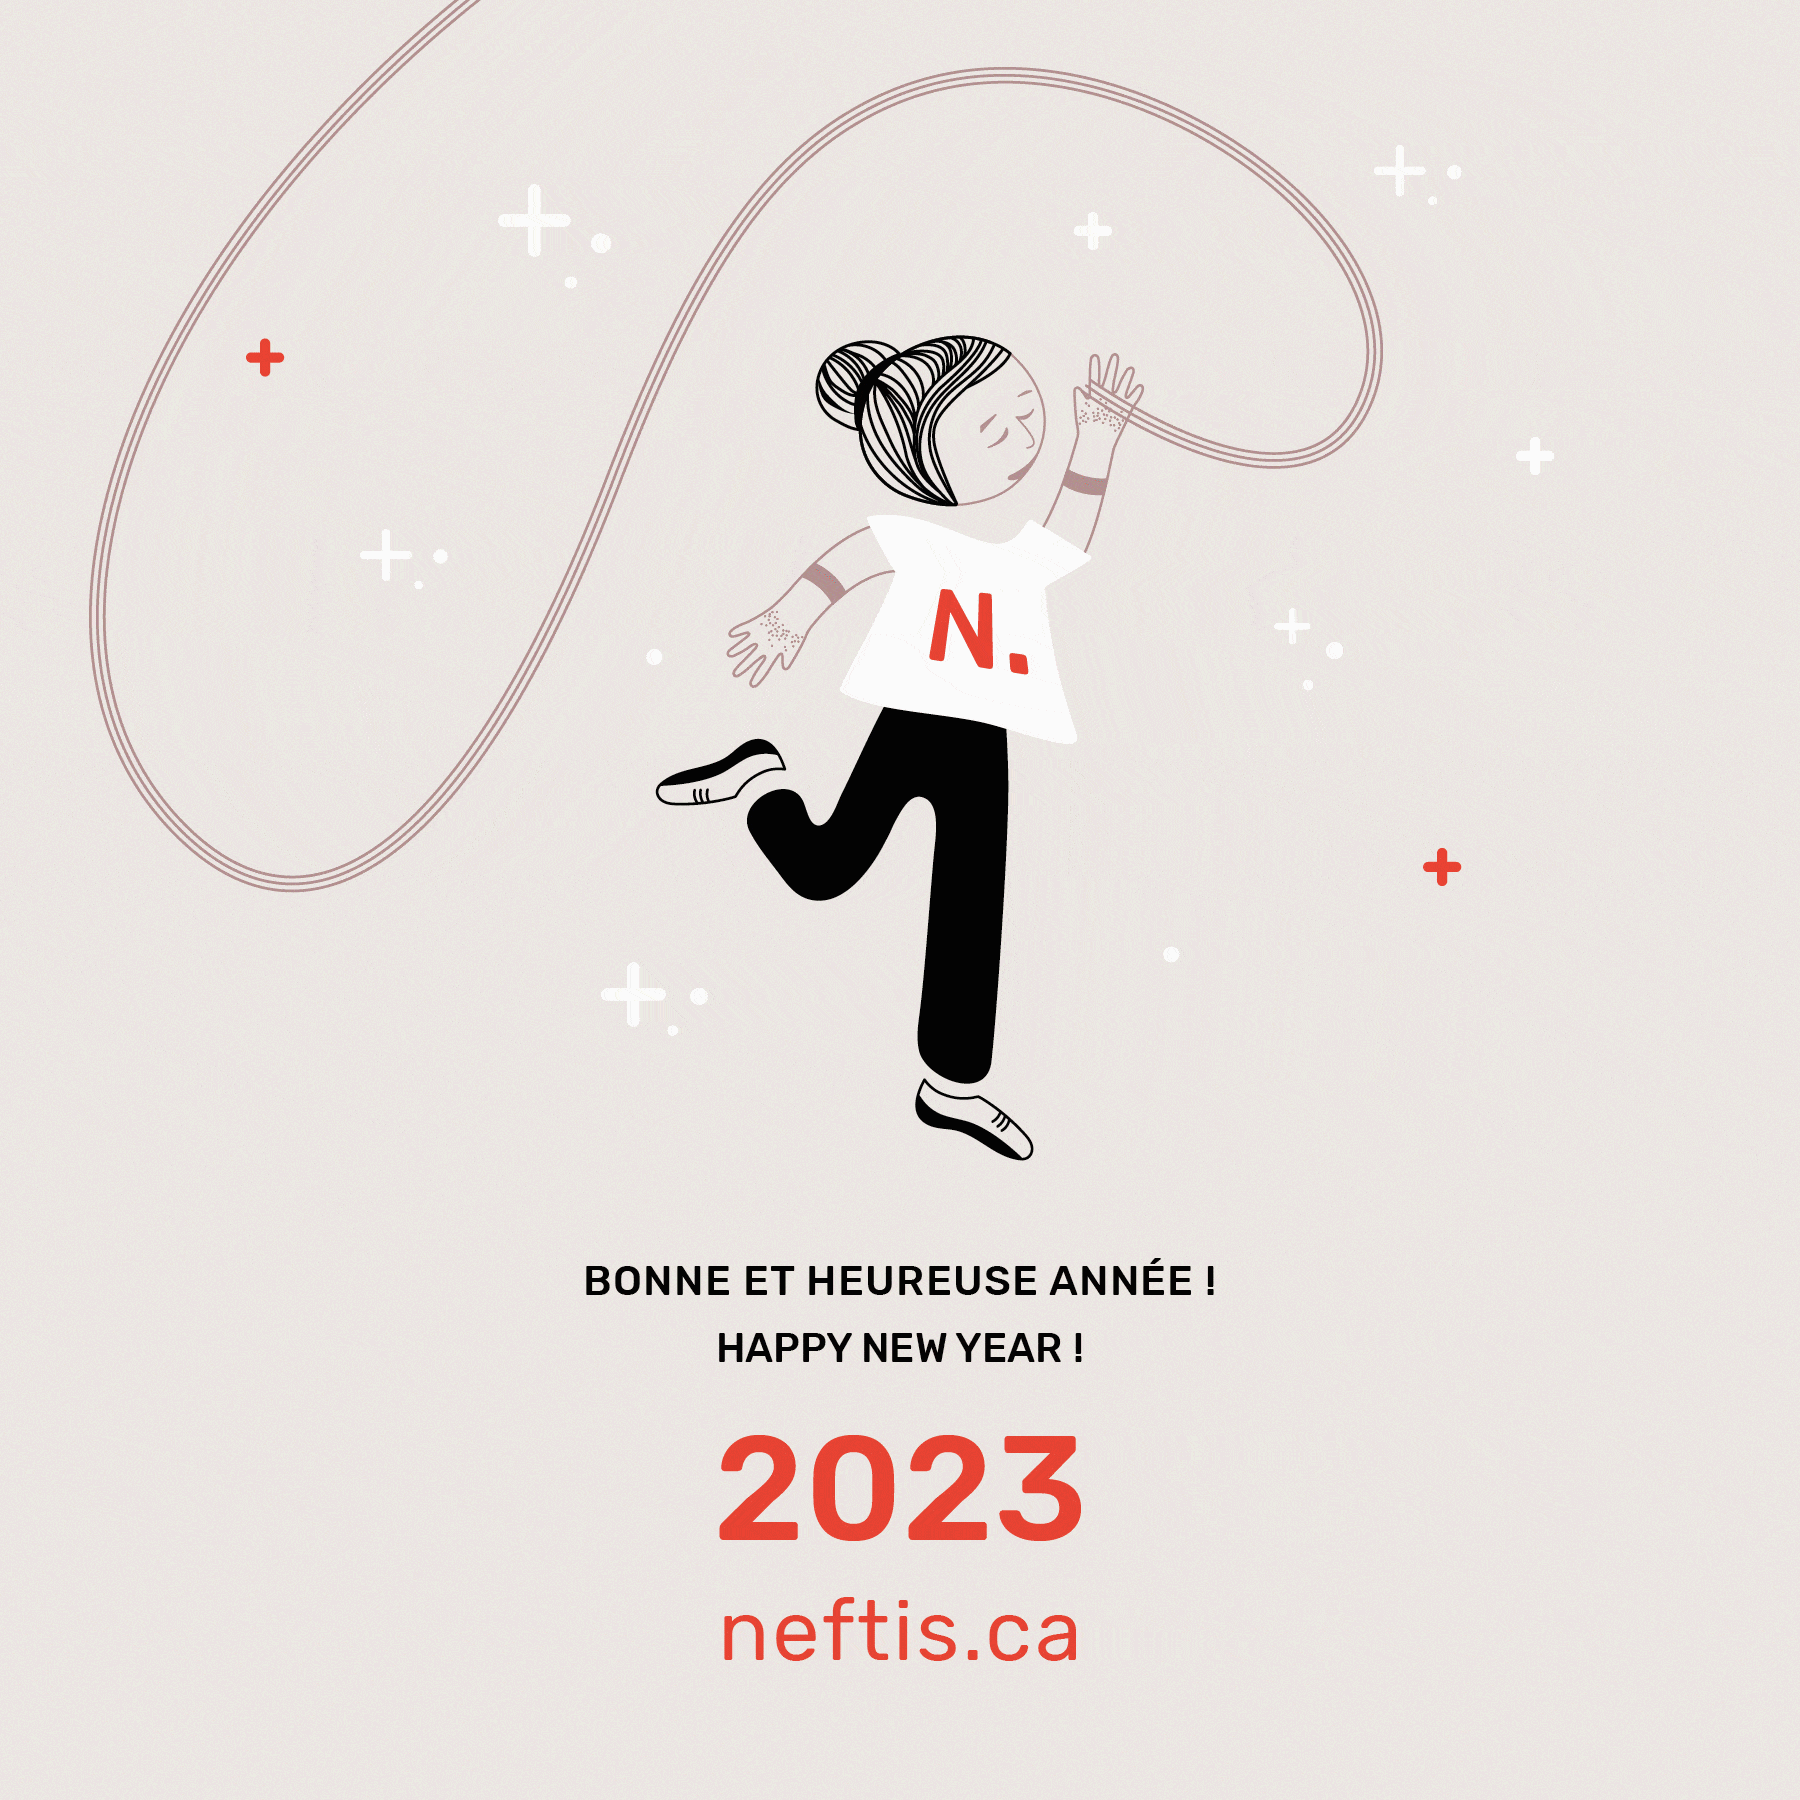 Neftis wishes a happy 2023